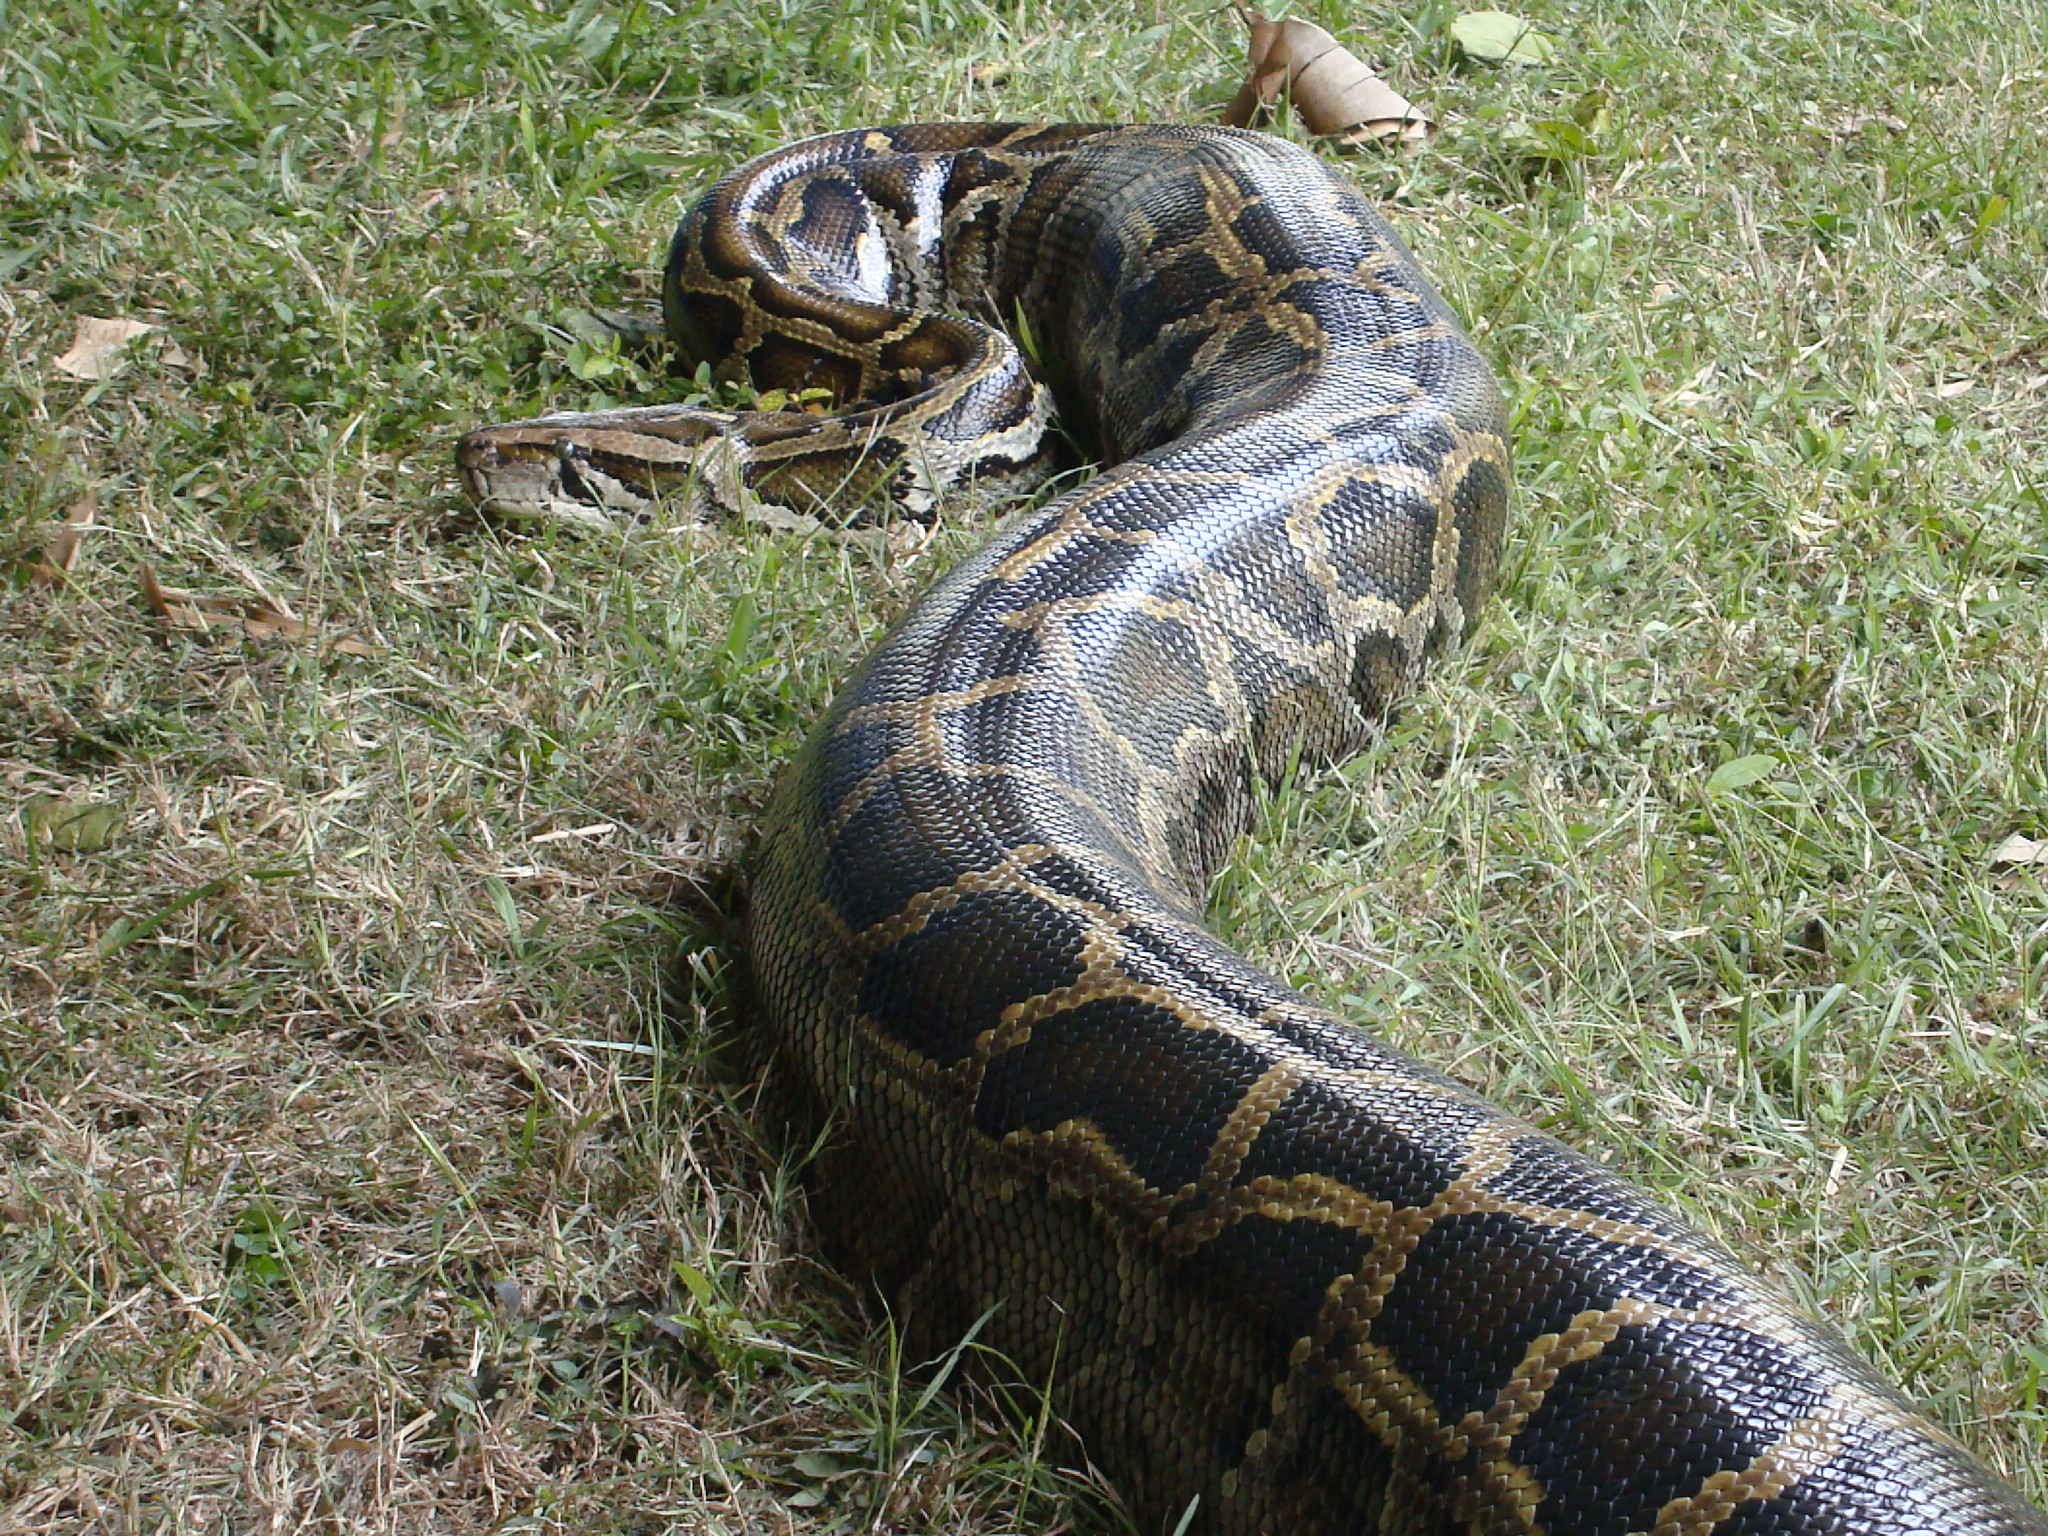 Florida everglades overrun with pythons